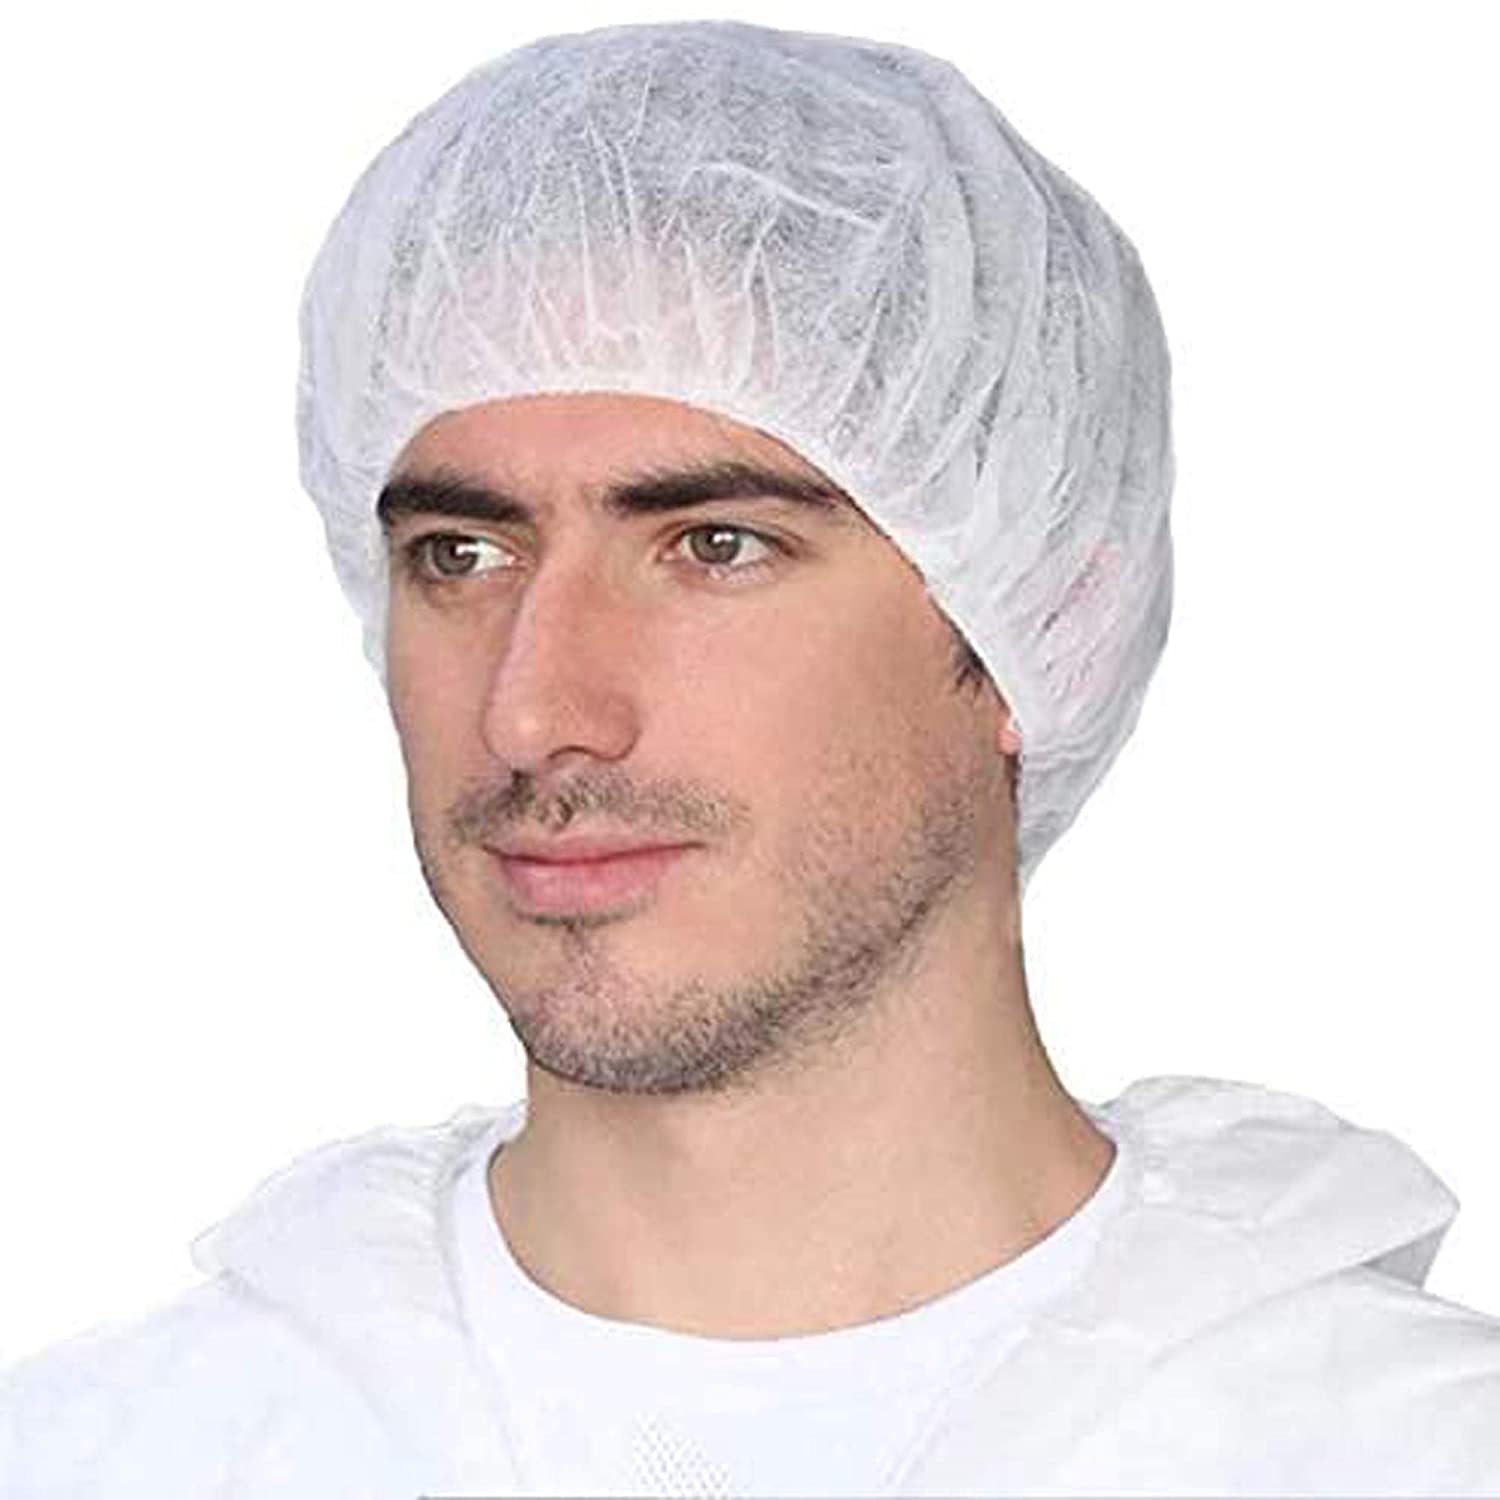 Disposable headcap white | Lazada PH